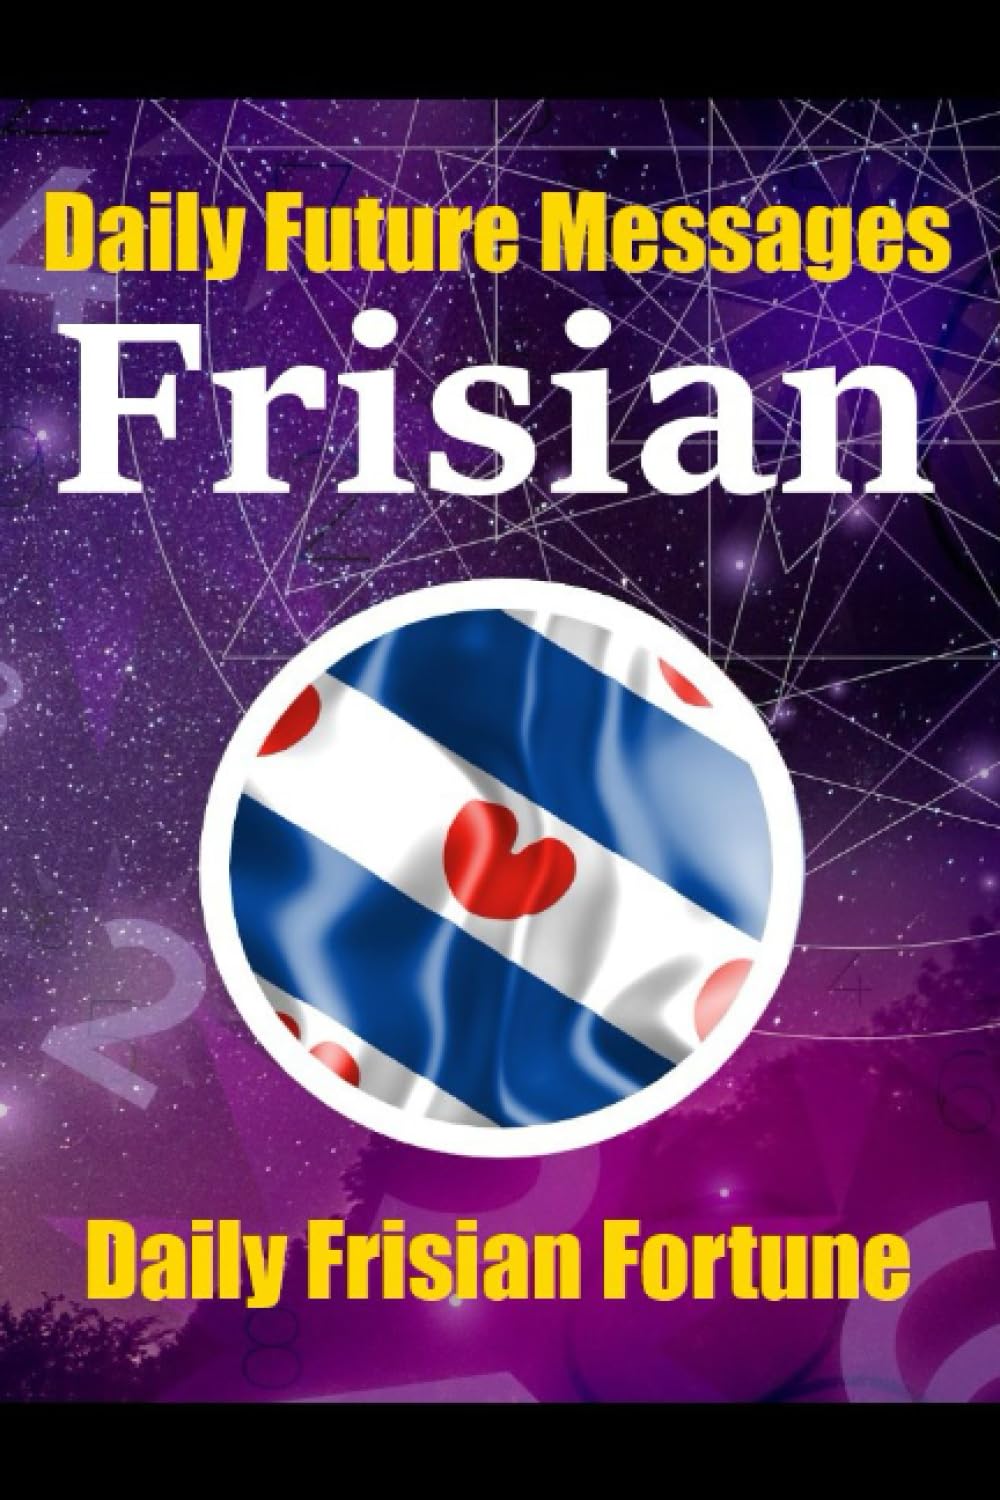 Learn the Frisian Language through Daily Random Future Messages - Skriuwer.com